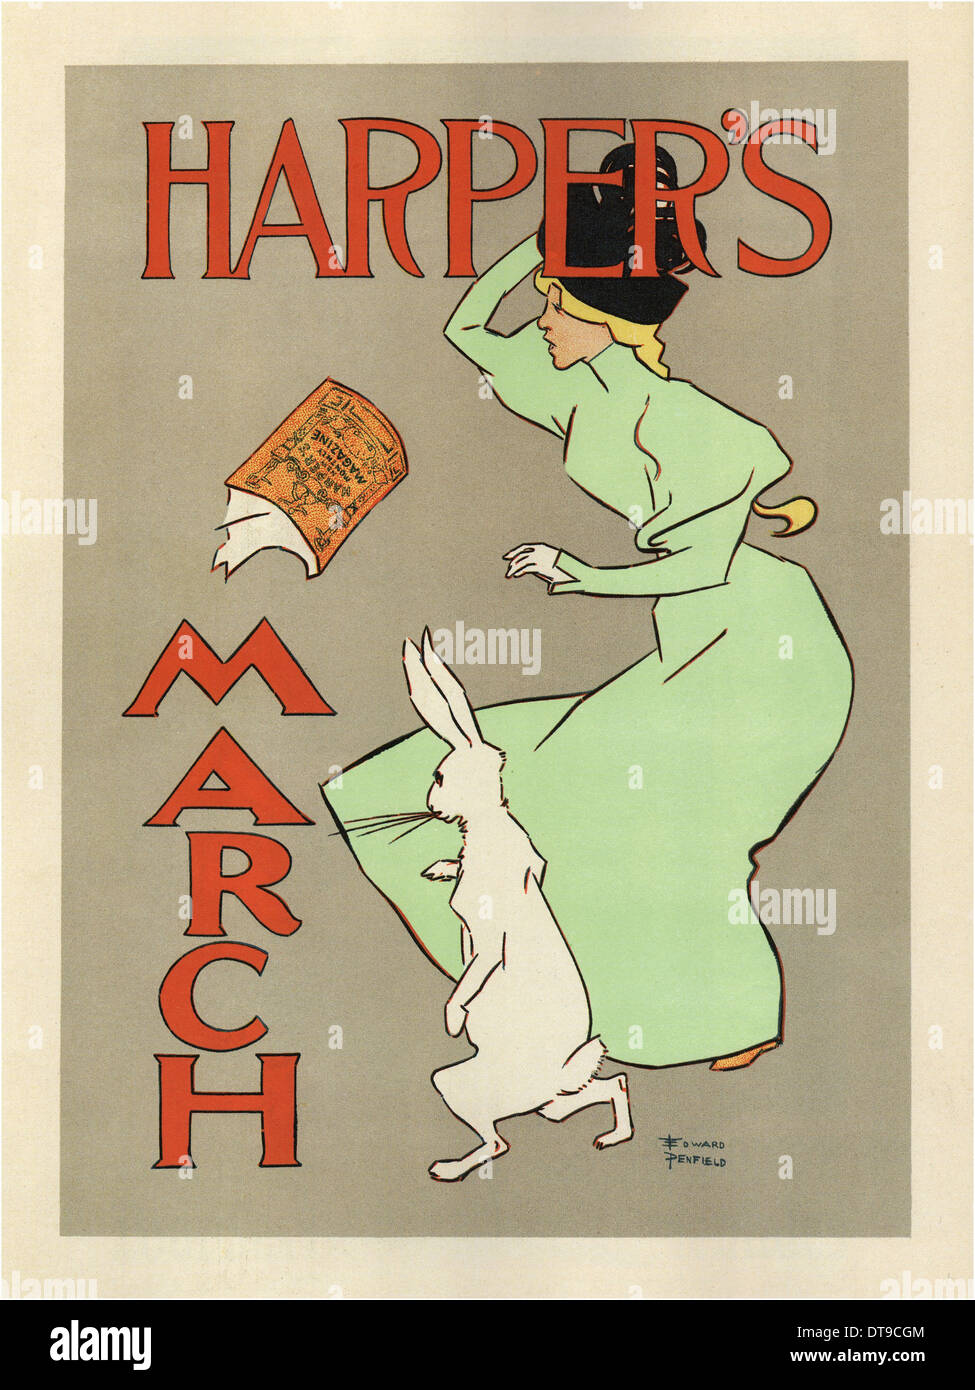 Harper's March, 1894. Artist: Penfield, Edward (1866-1925) Stock Photo